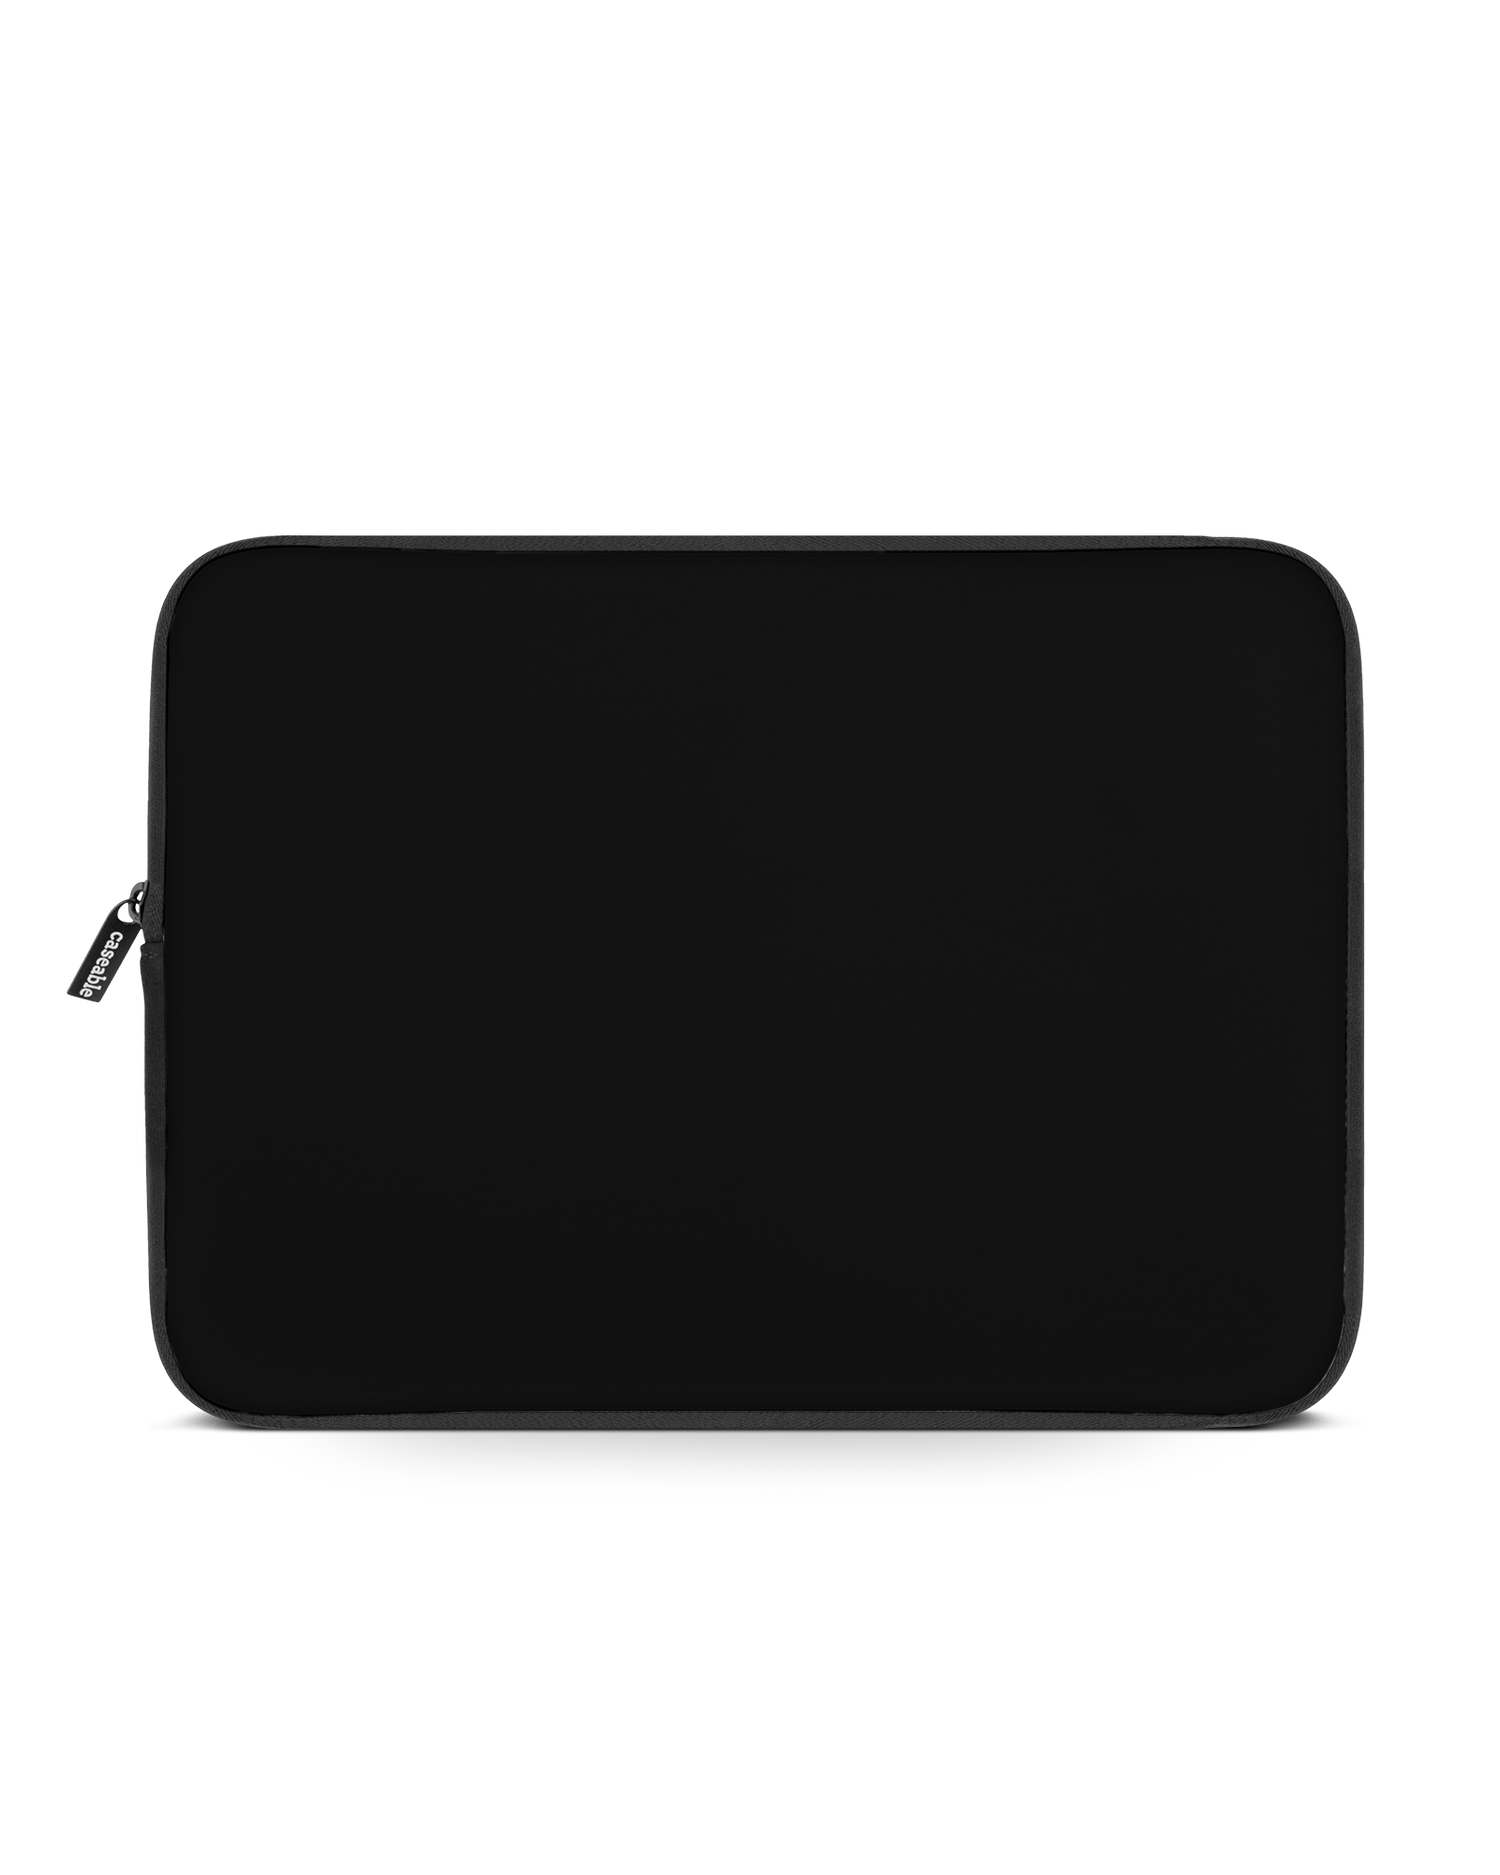 BLACK Laptop Case 15 inch: Front View